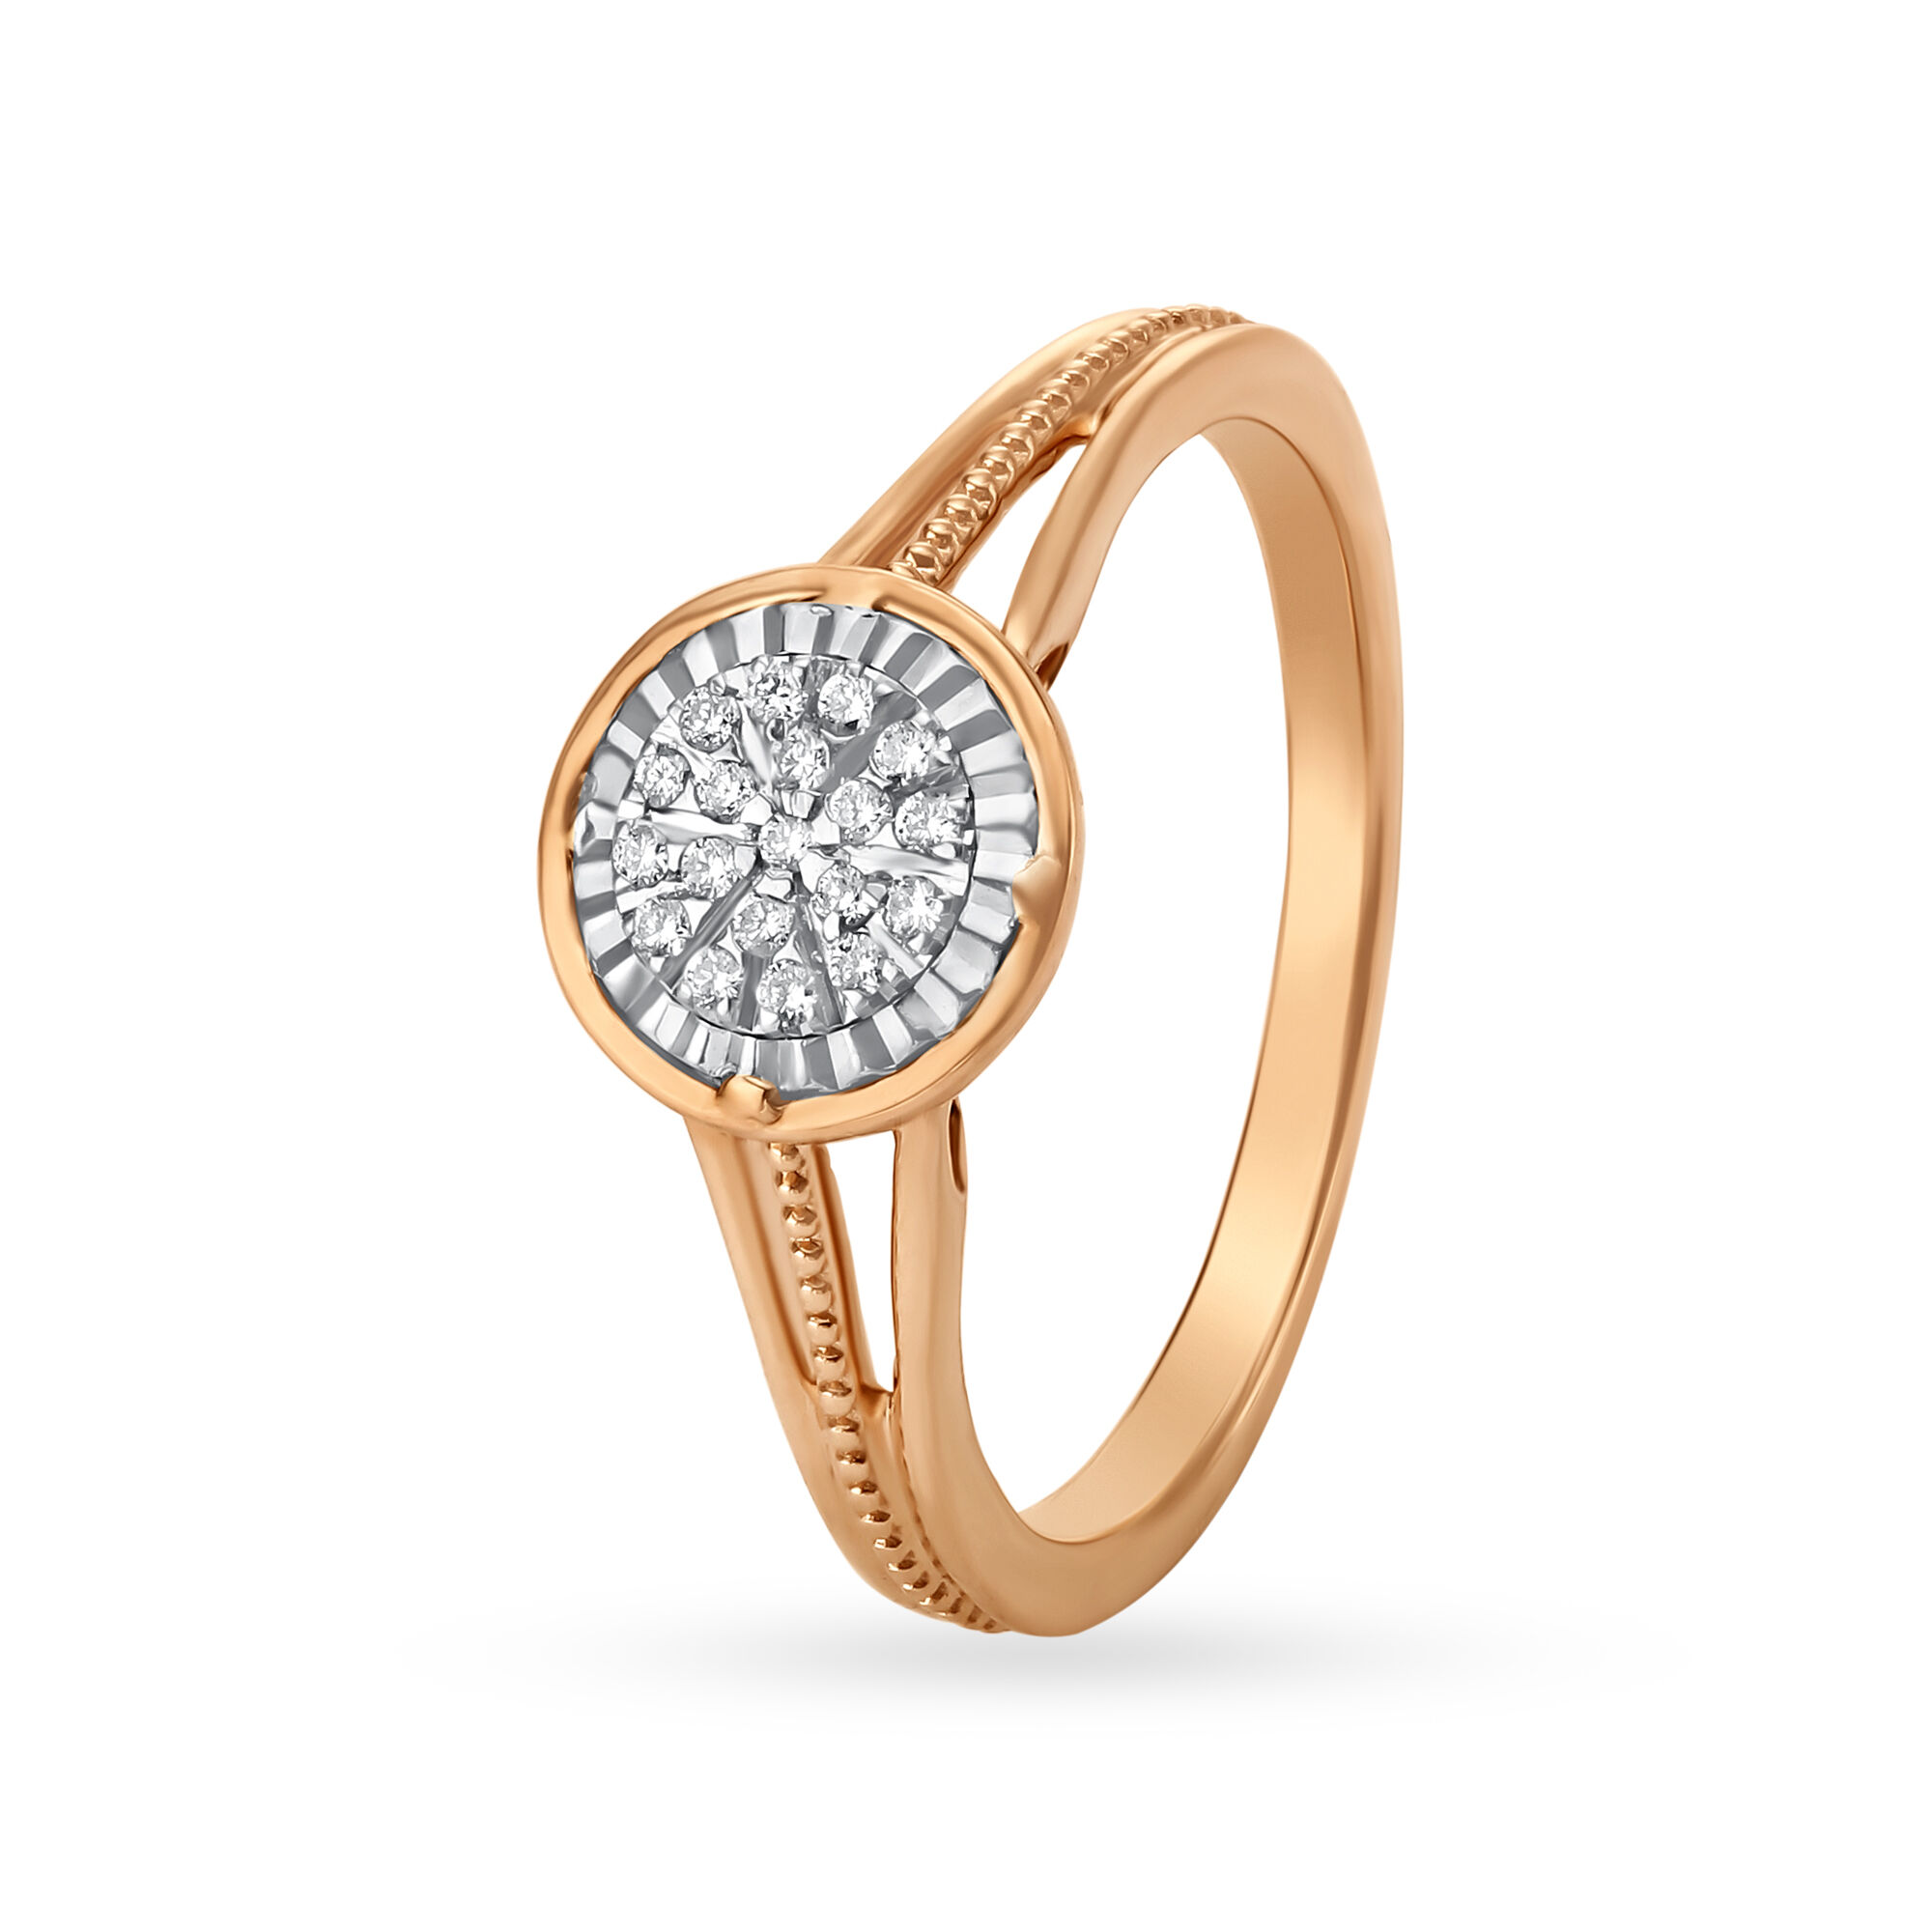 Clean Linear Diamond Ring